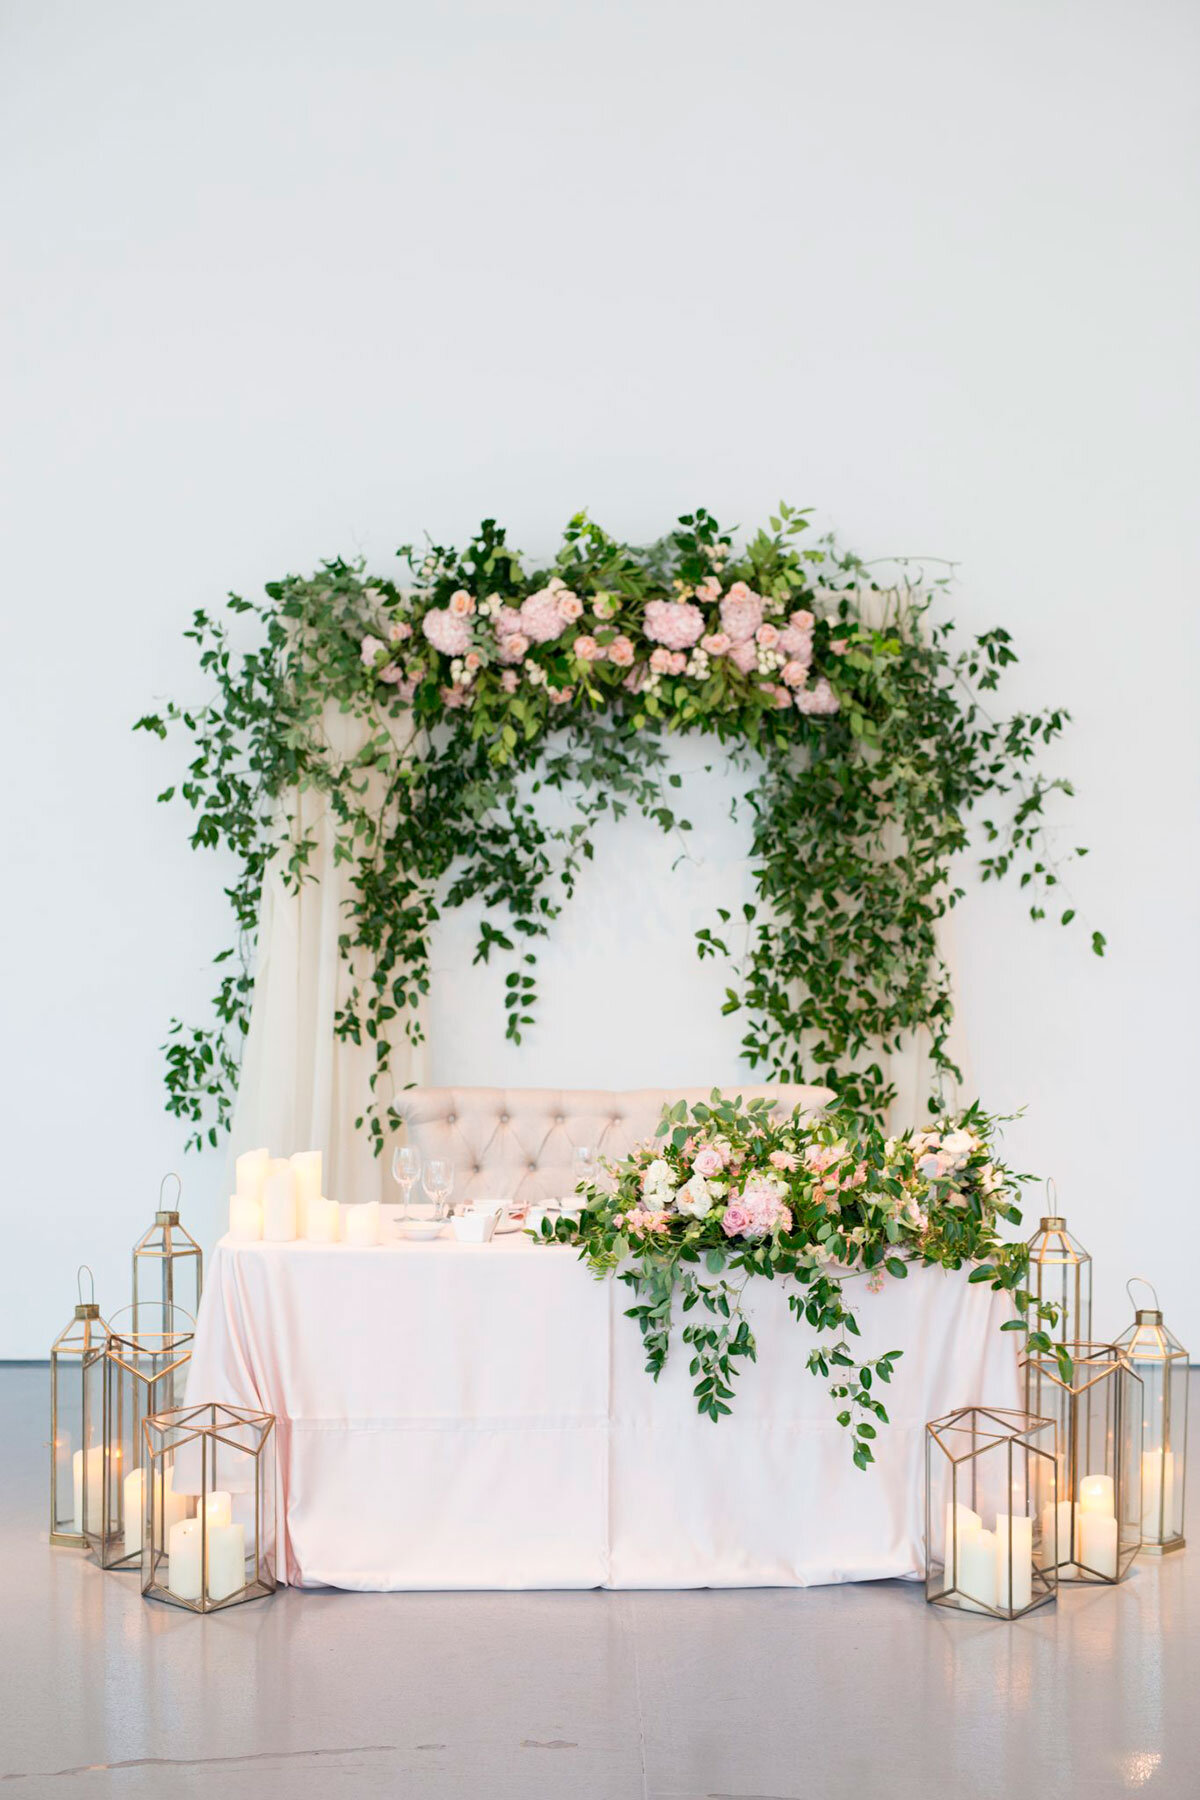 Sue-Gallo-Designs-Wedding-Florist-in-Southern-Ontario-Vineyard-Bride-The-Swish-List-0001.JPG